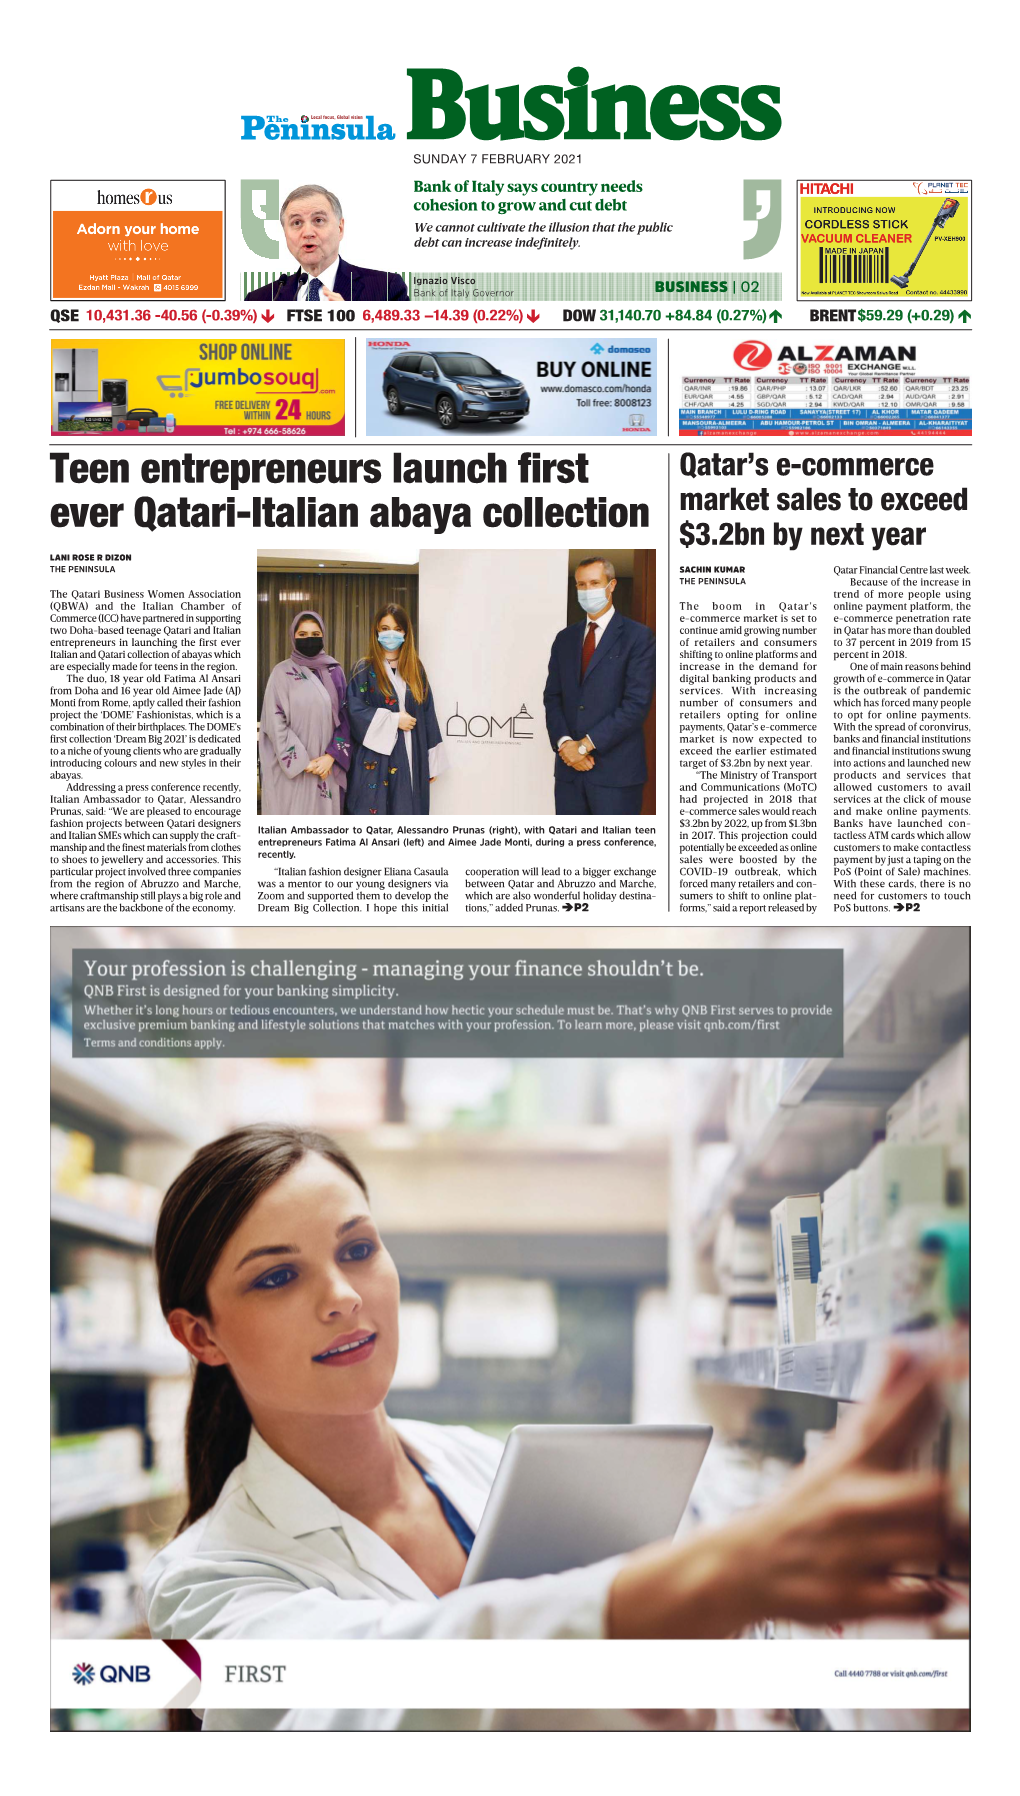 Teen Entrepreneurs Launch First Ever Qatari-Italian Abaya Collection